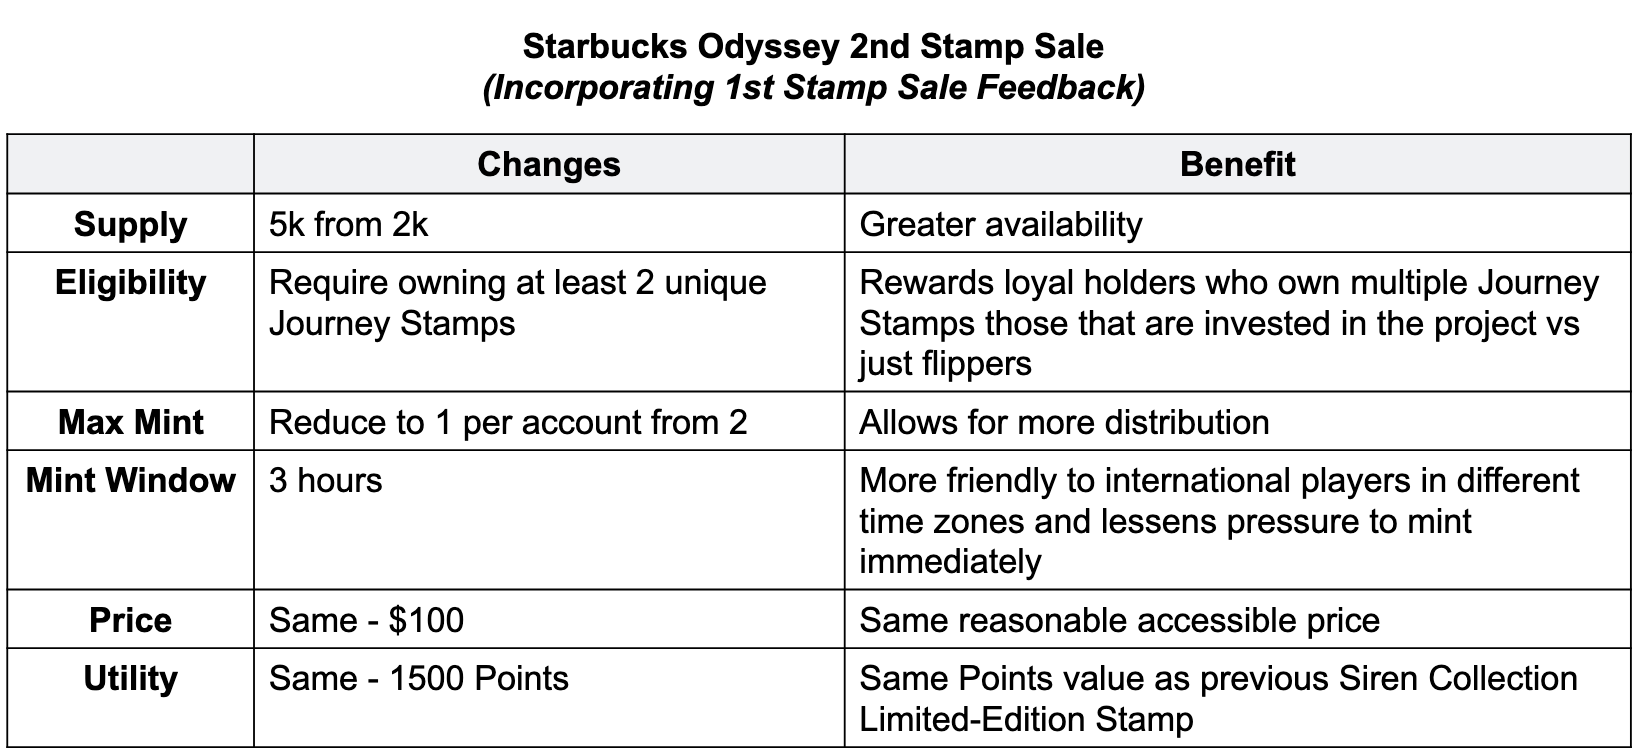 Starbucks Odyssey 2nd Stamp Sale